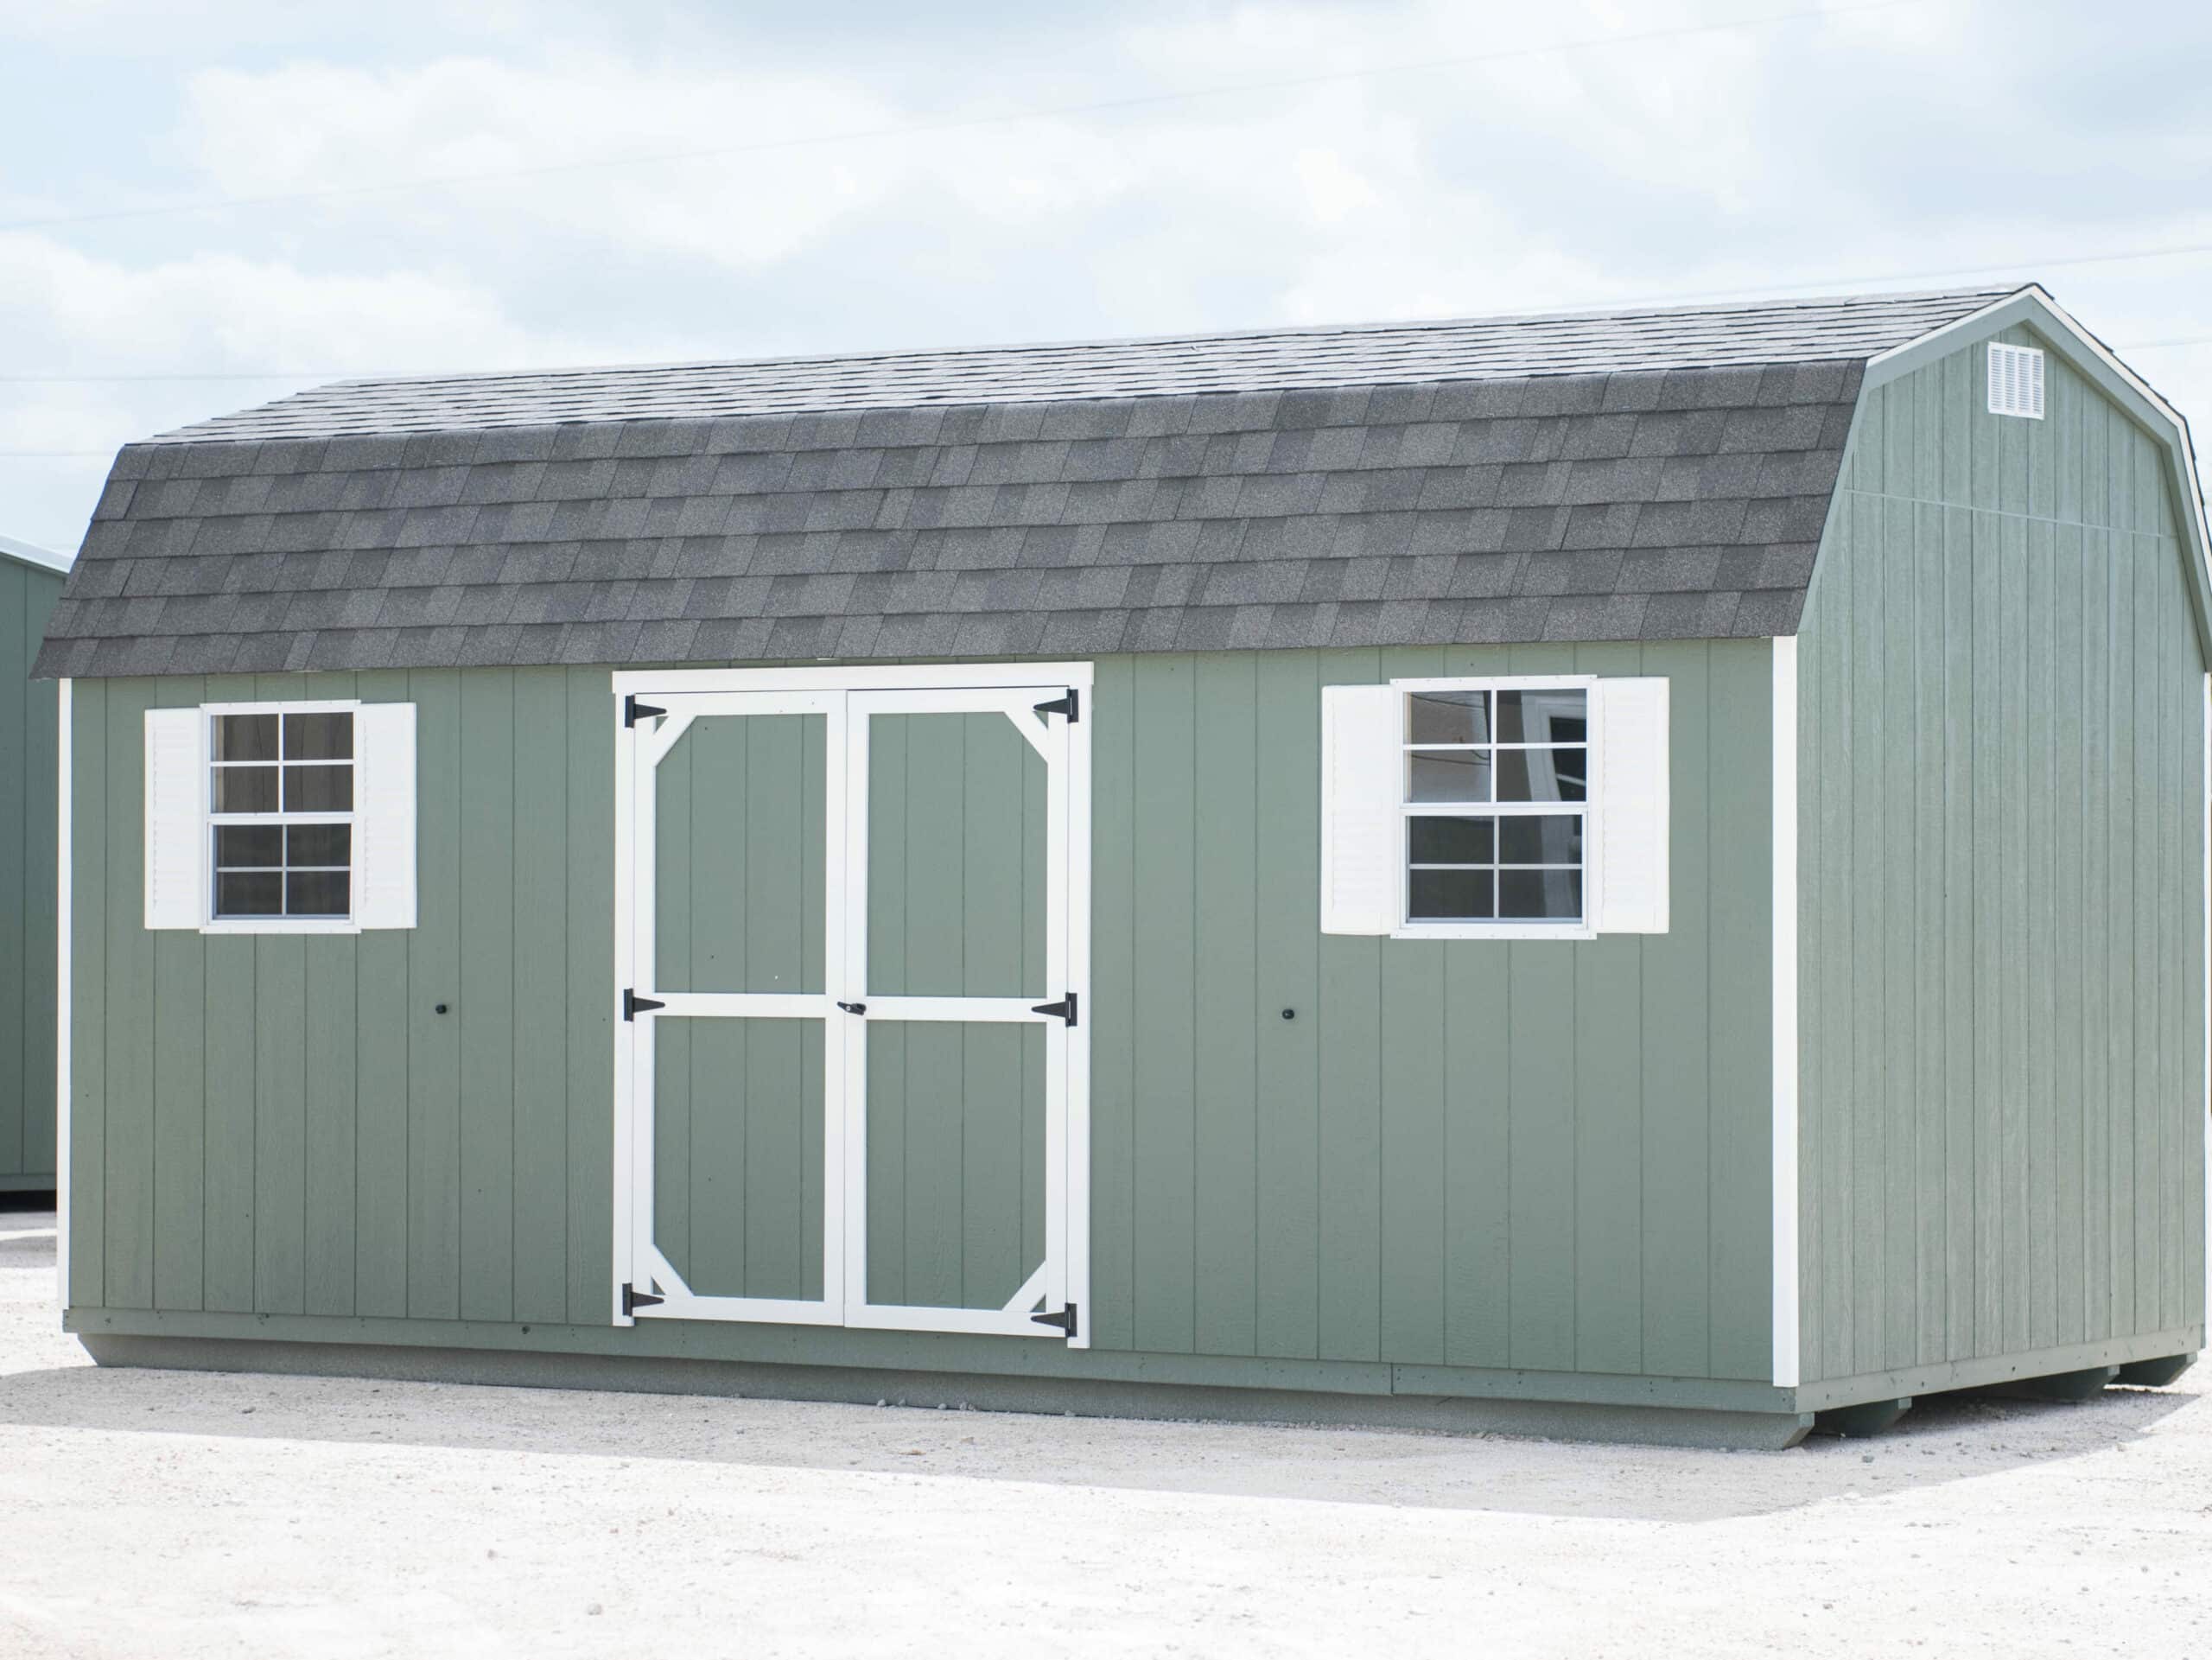 lofted barn dutchbarn dark grey, barn white trim weathered wood shingled roof shown with additional single wood door in texas